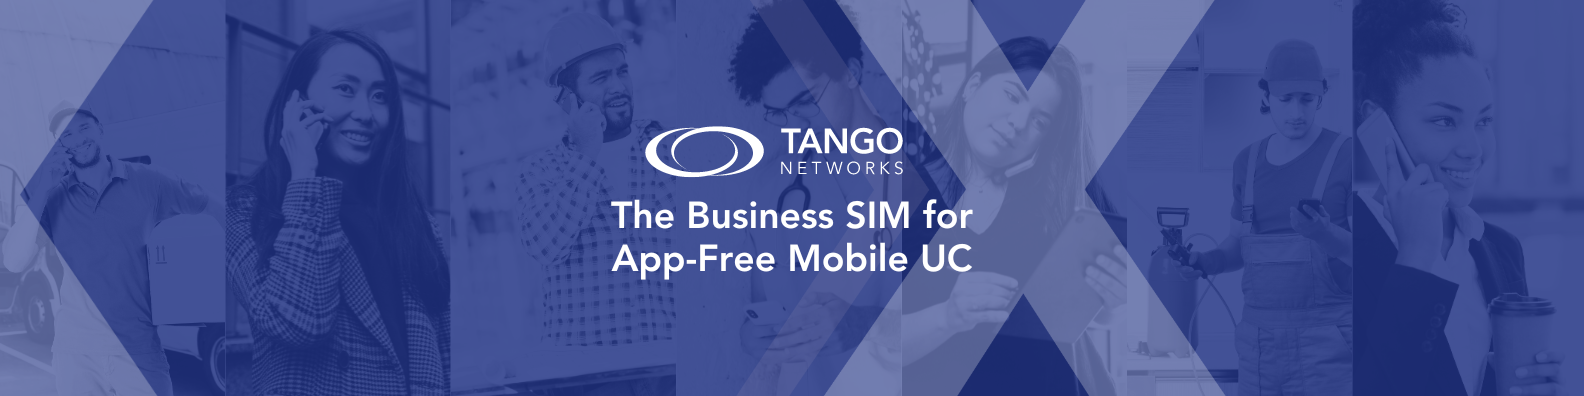 Tango Networks LinkedIn Banners - Company Page